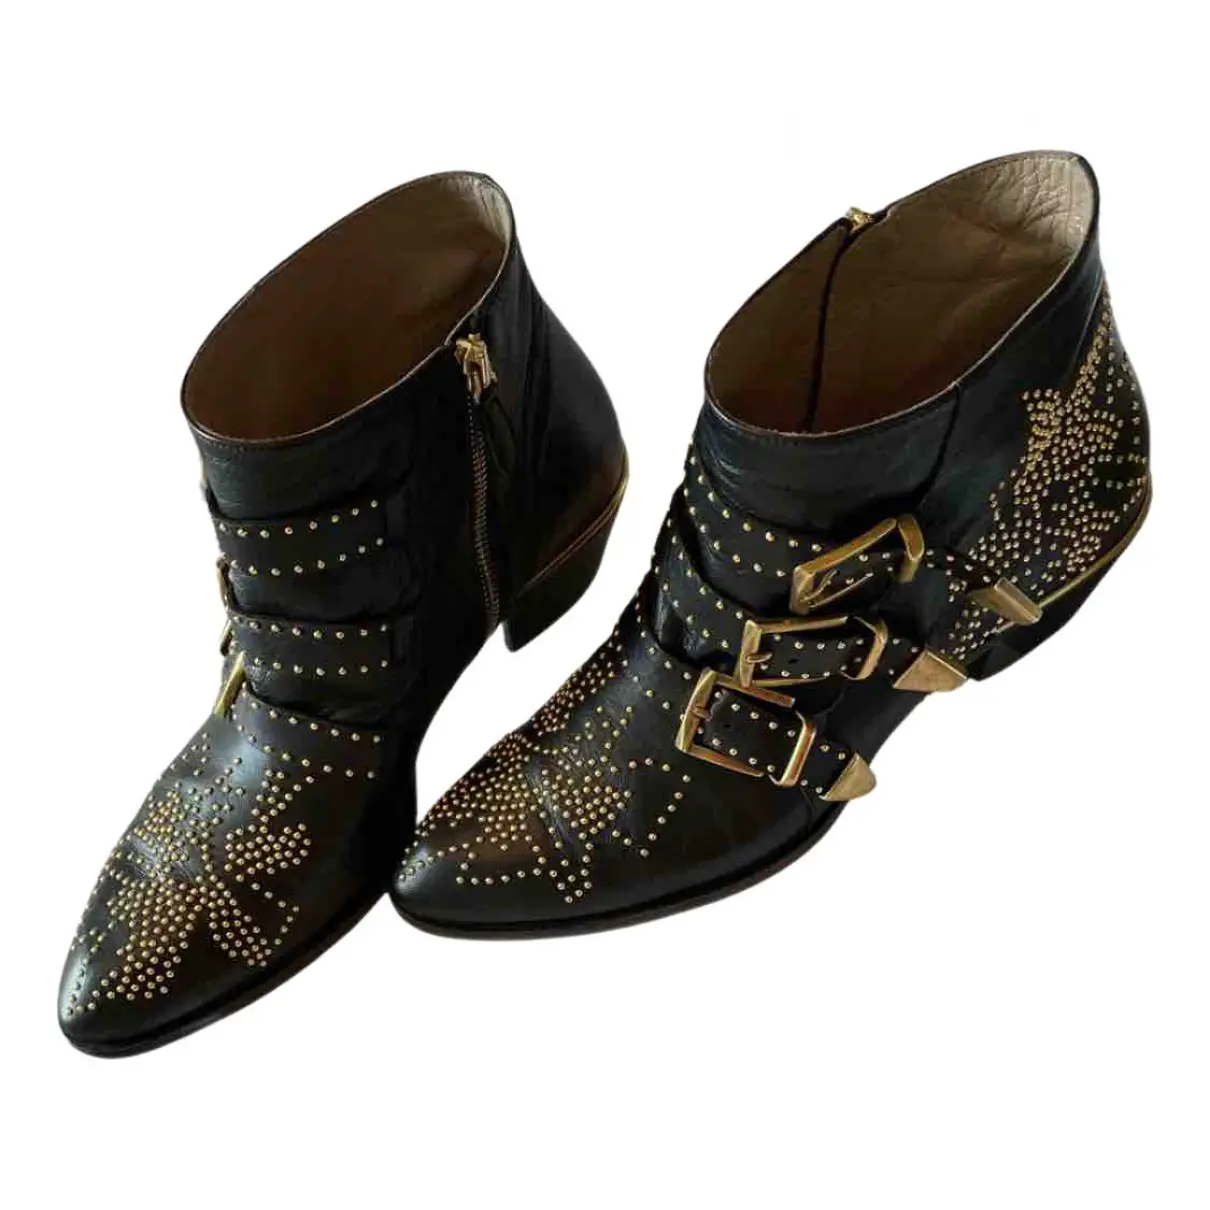 Buy Chloé Susanna leather western boots online